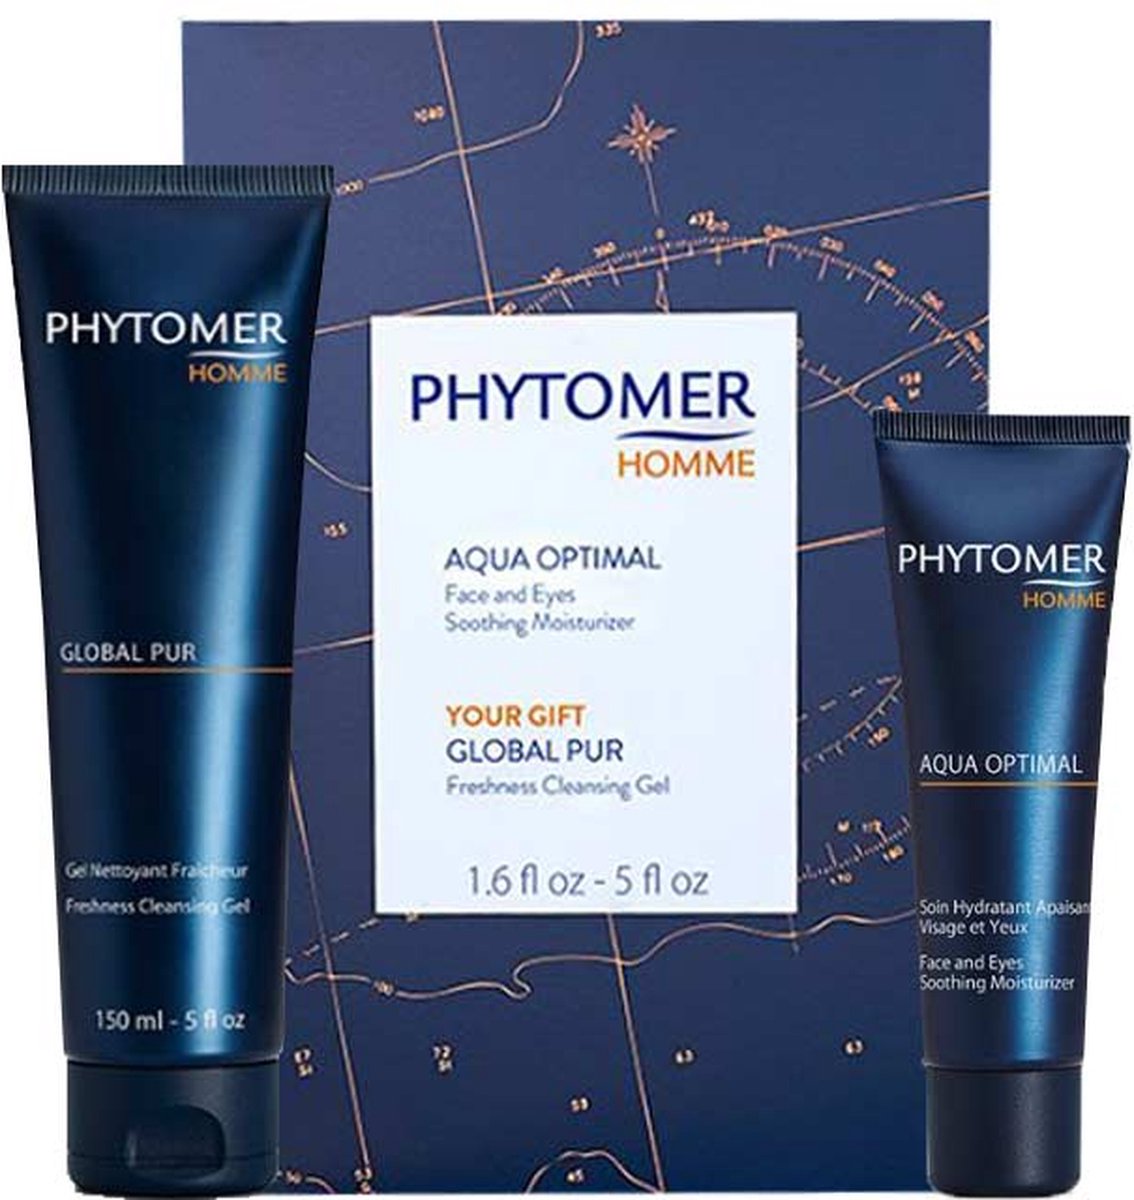 Phytomer Homme set - Aqua Optimal faces & eyes moisture 50ml - Global pur cleansing gel 150ml